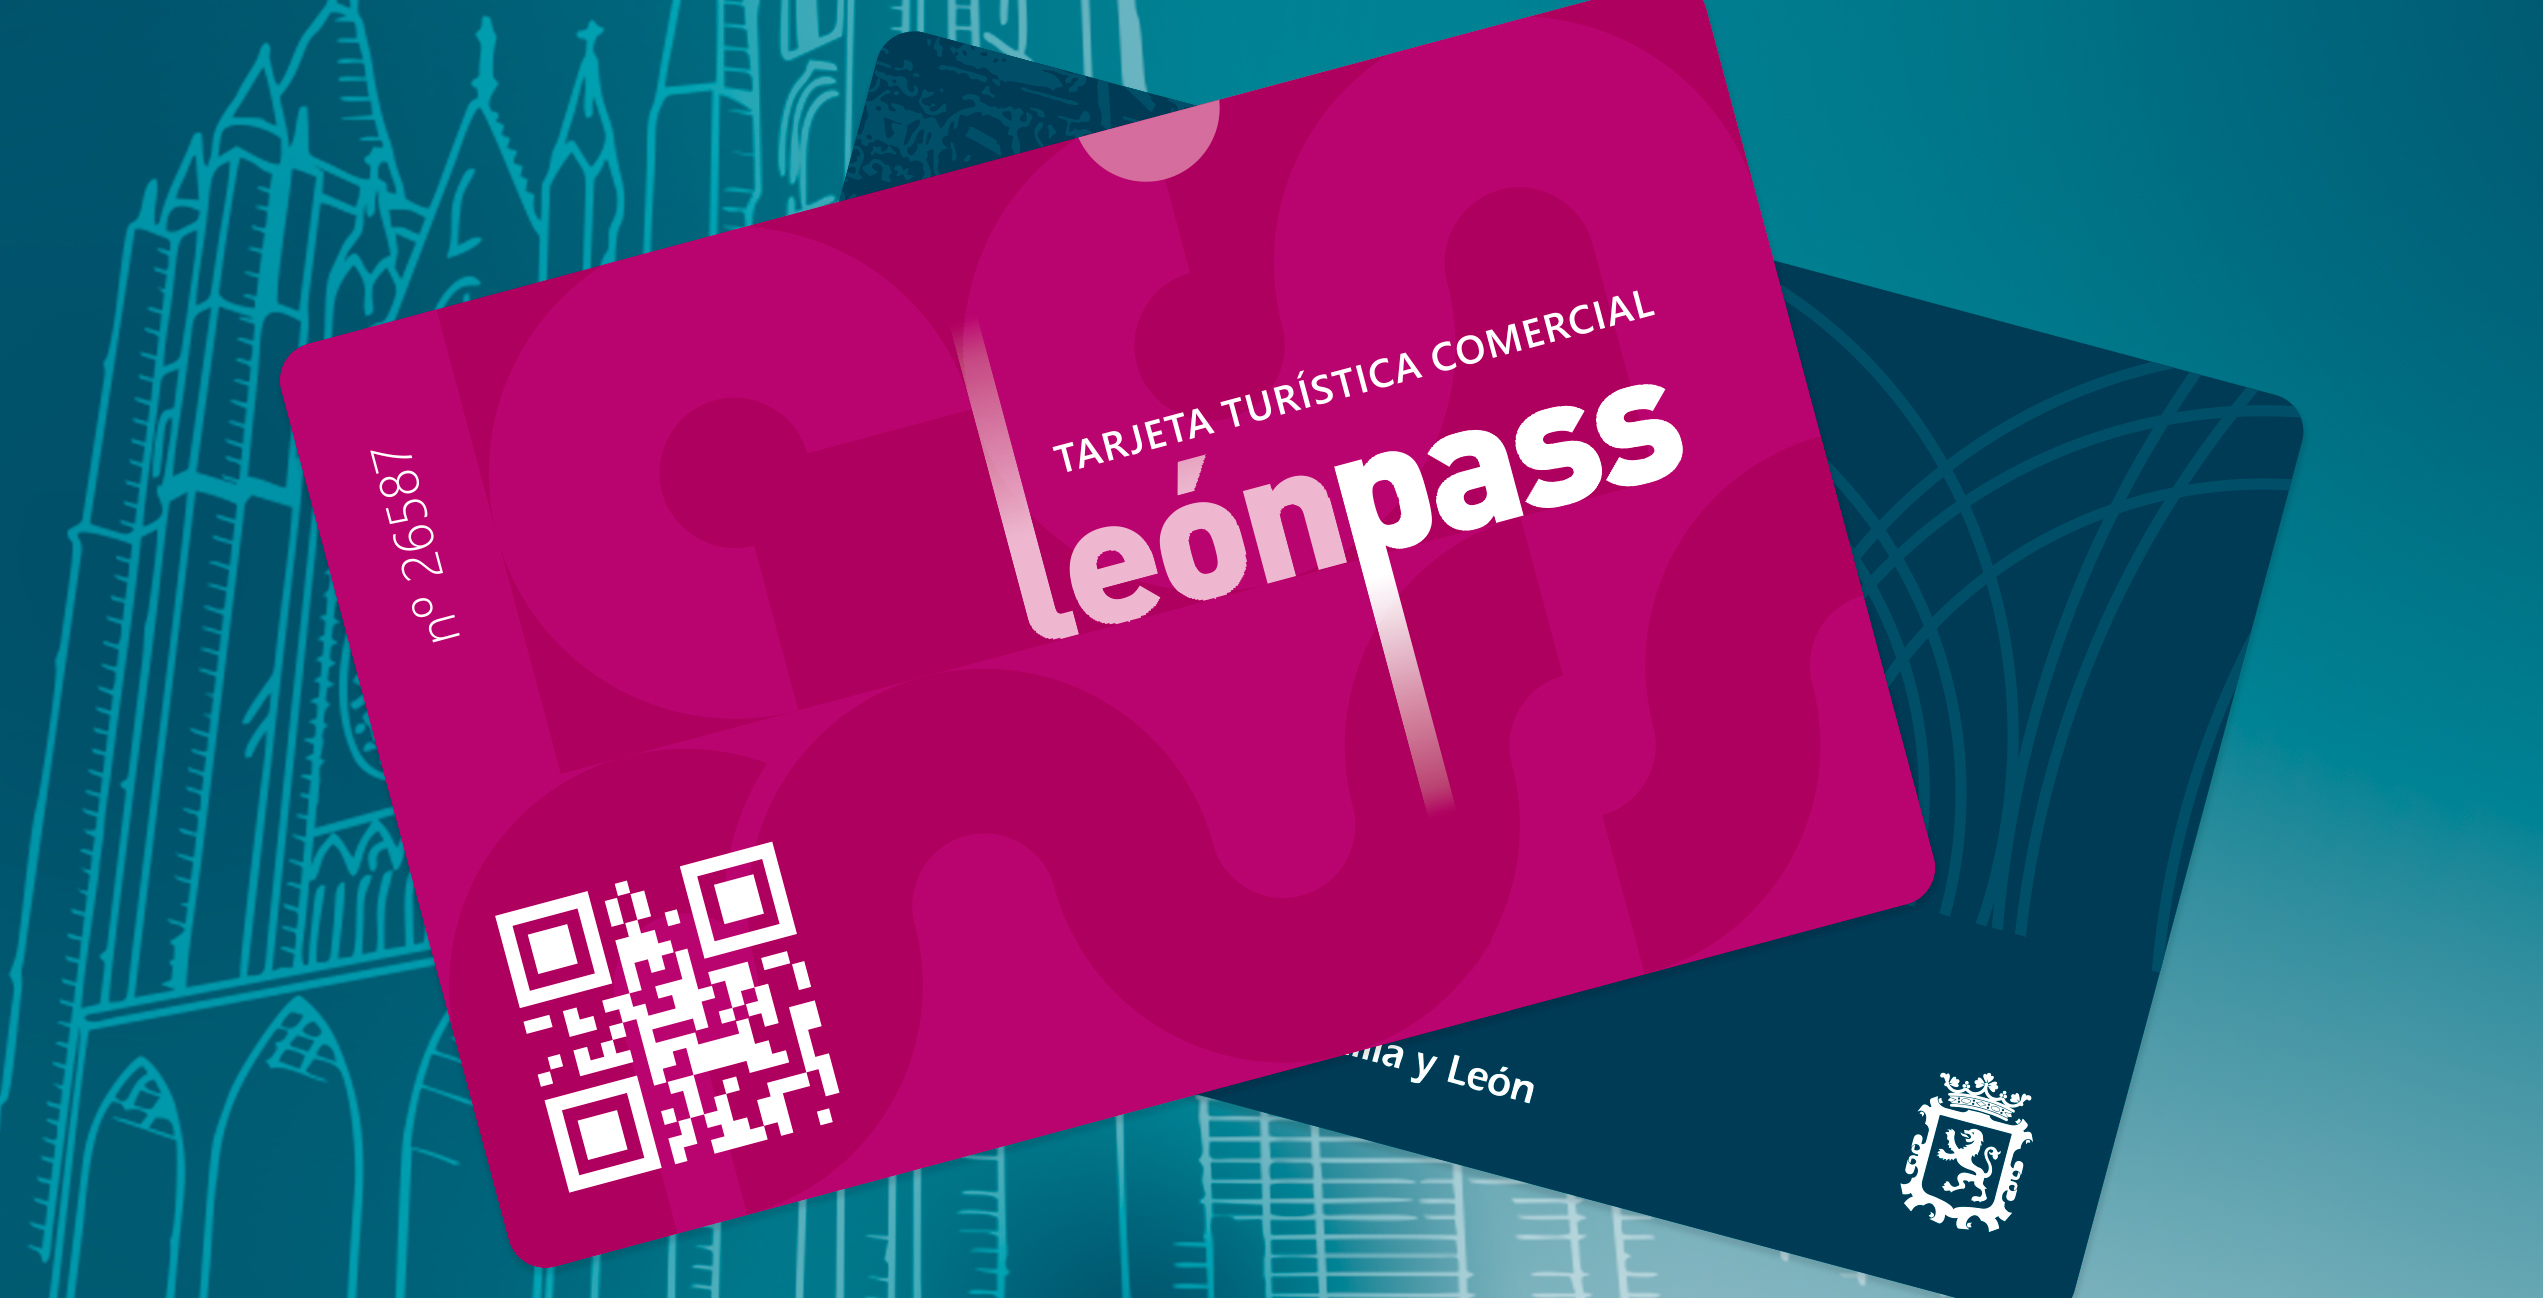 Leónpass - tarjeta turística comercial 2